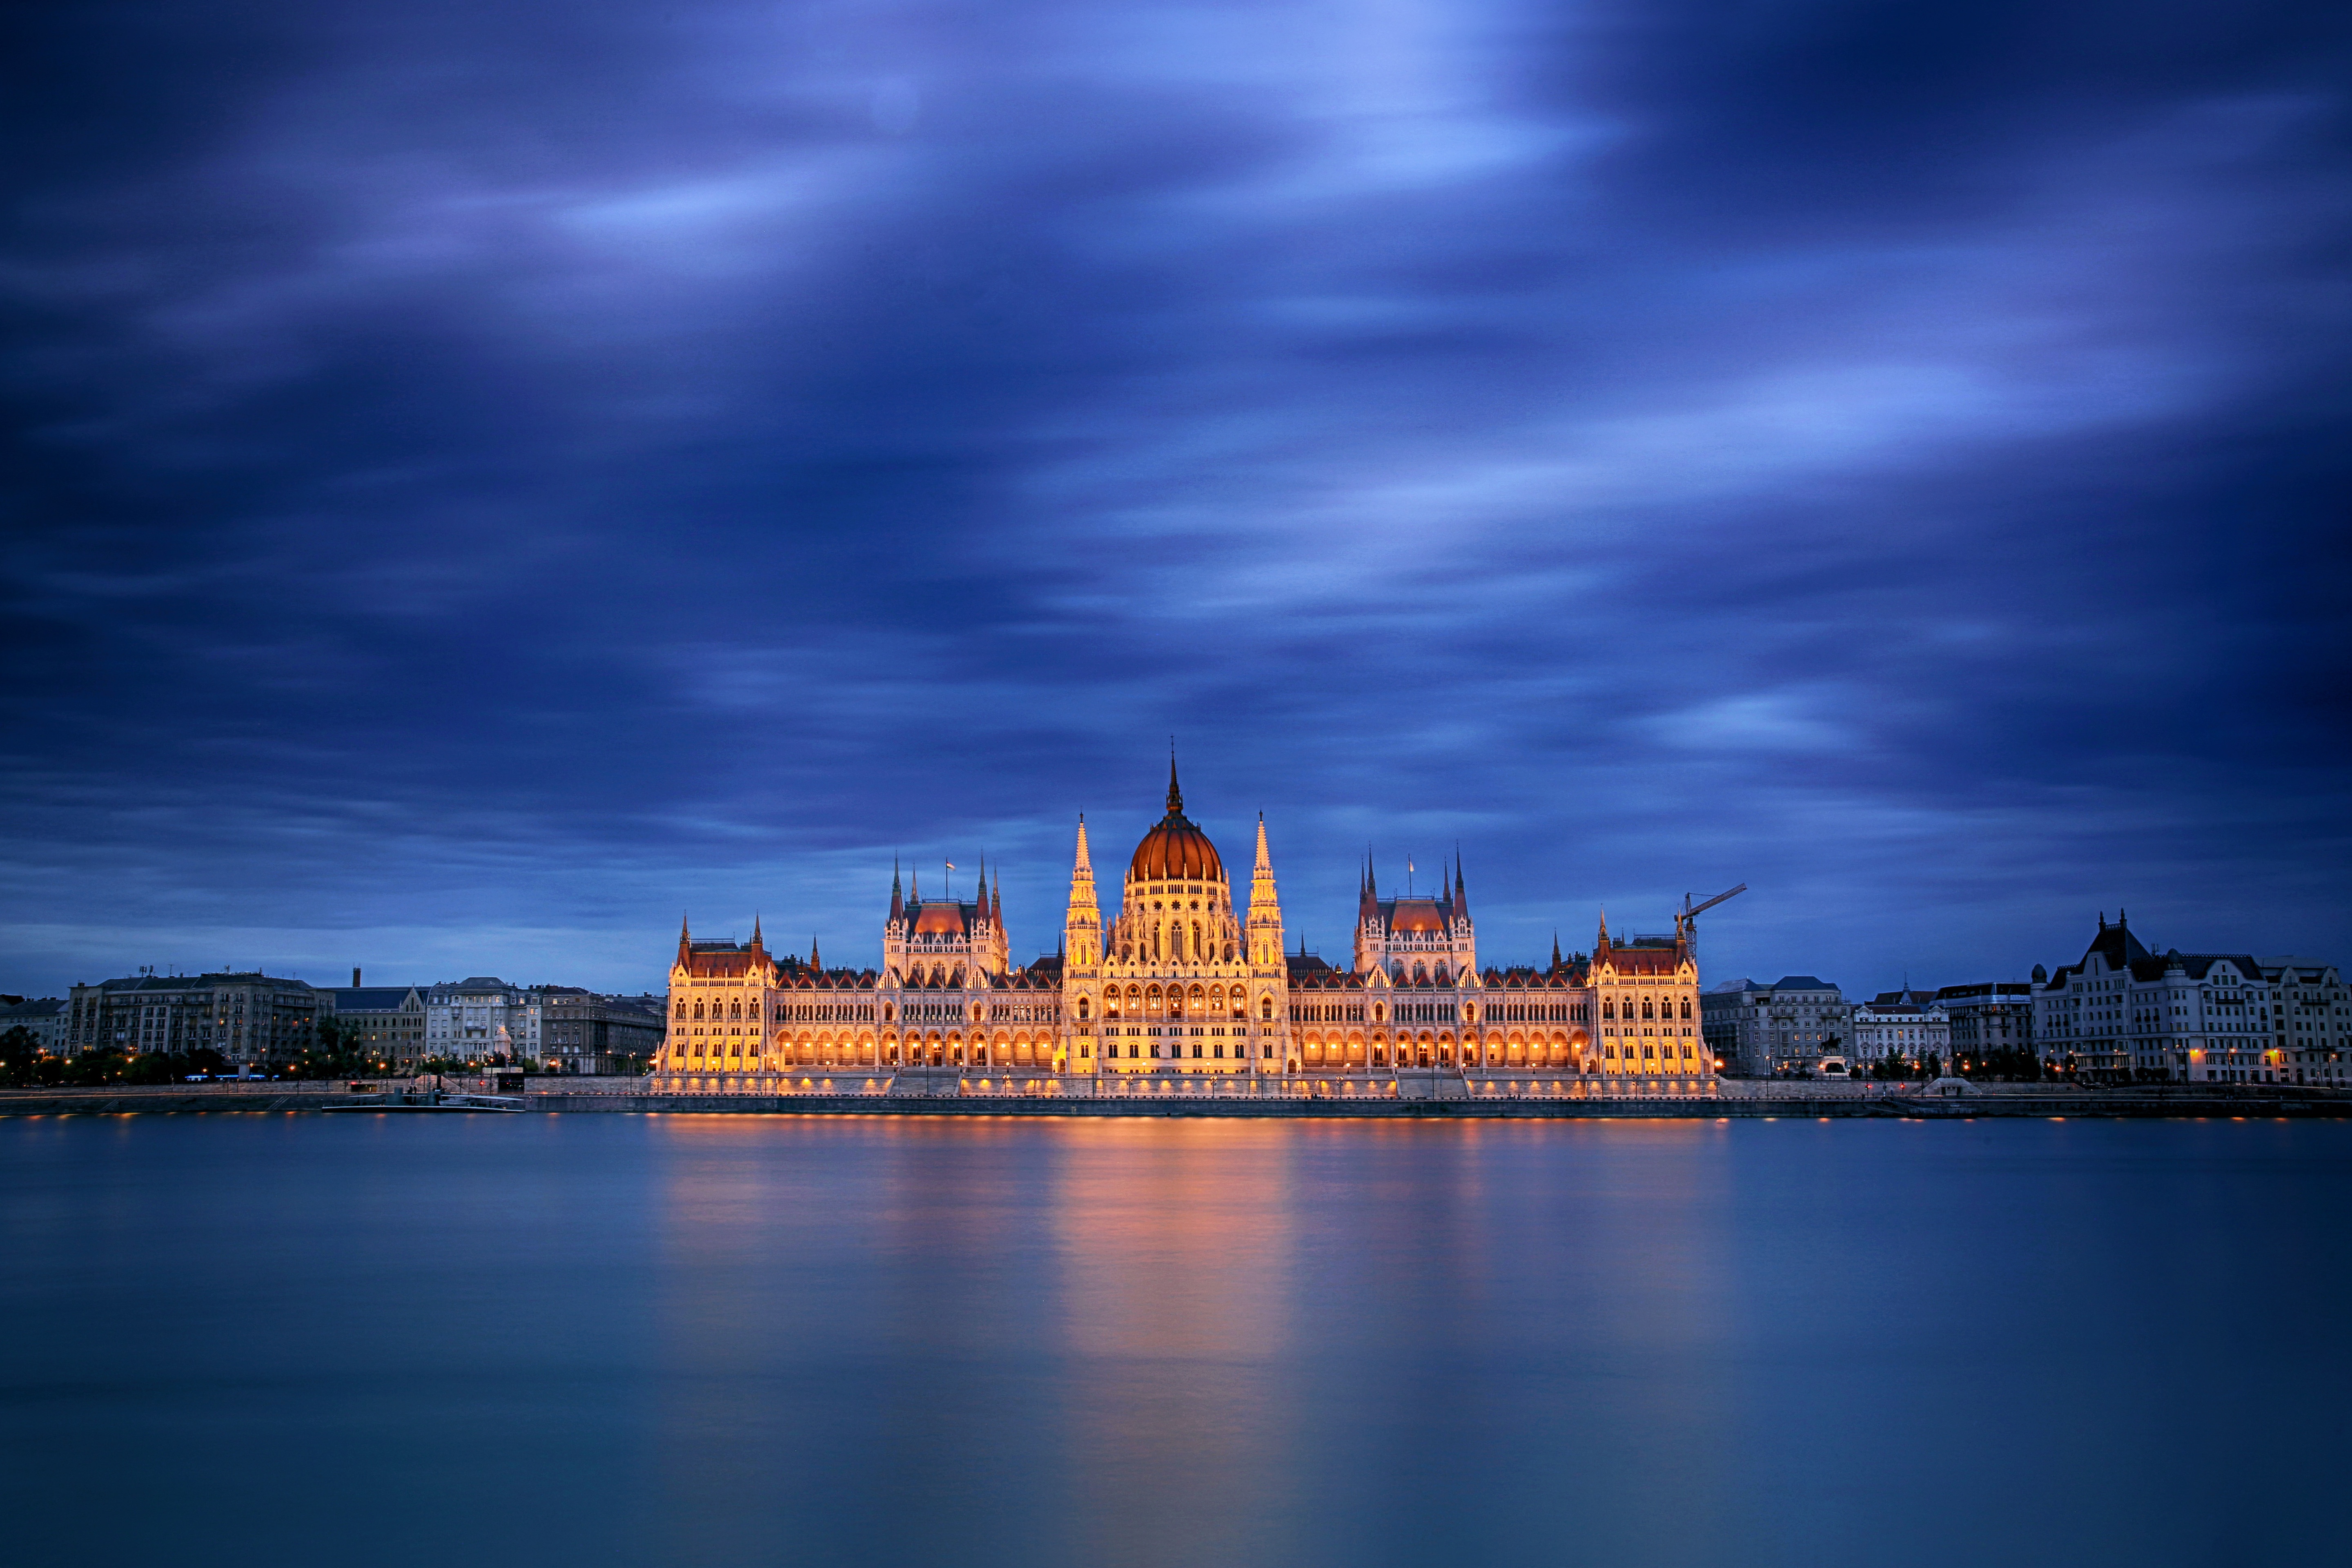 Man Made Hungarian Parliament Building 4k Ultra HD Wallpaper